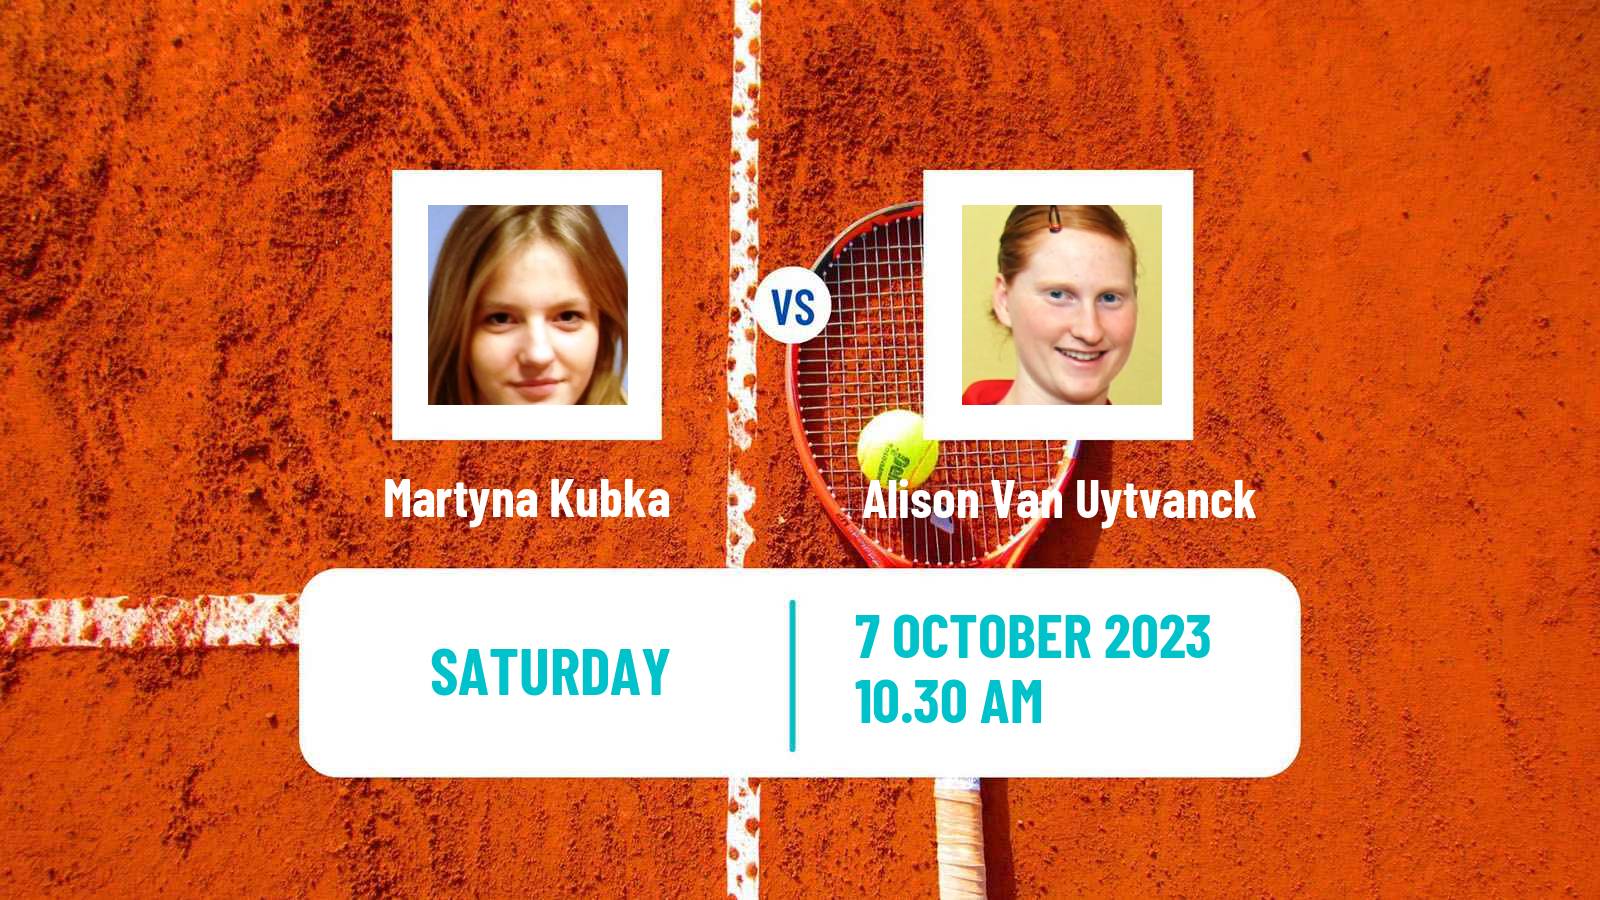 Tennis ITF W25 Reims Women Martyna Kubka - Alison Van Uytvanck